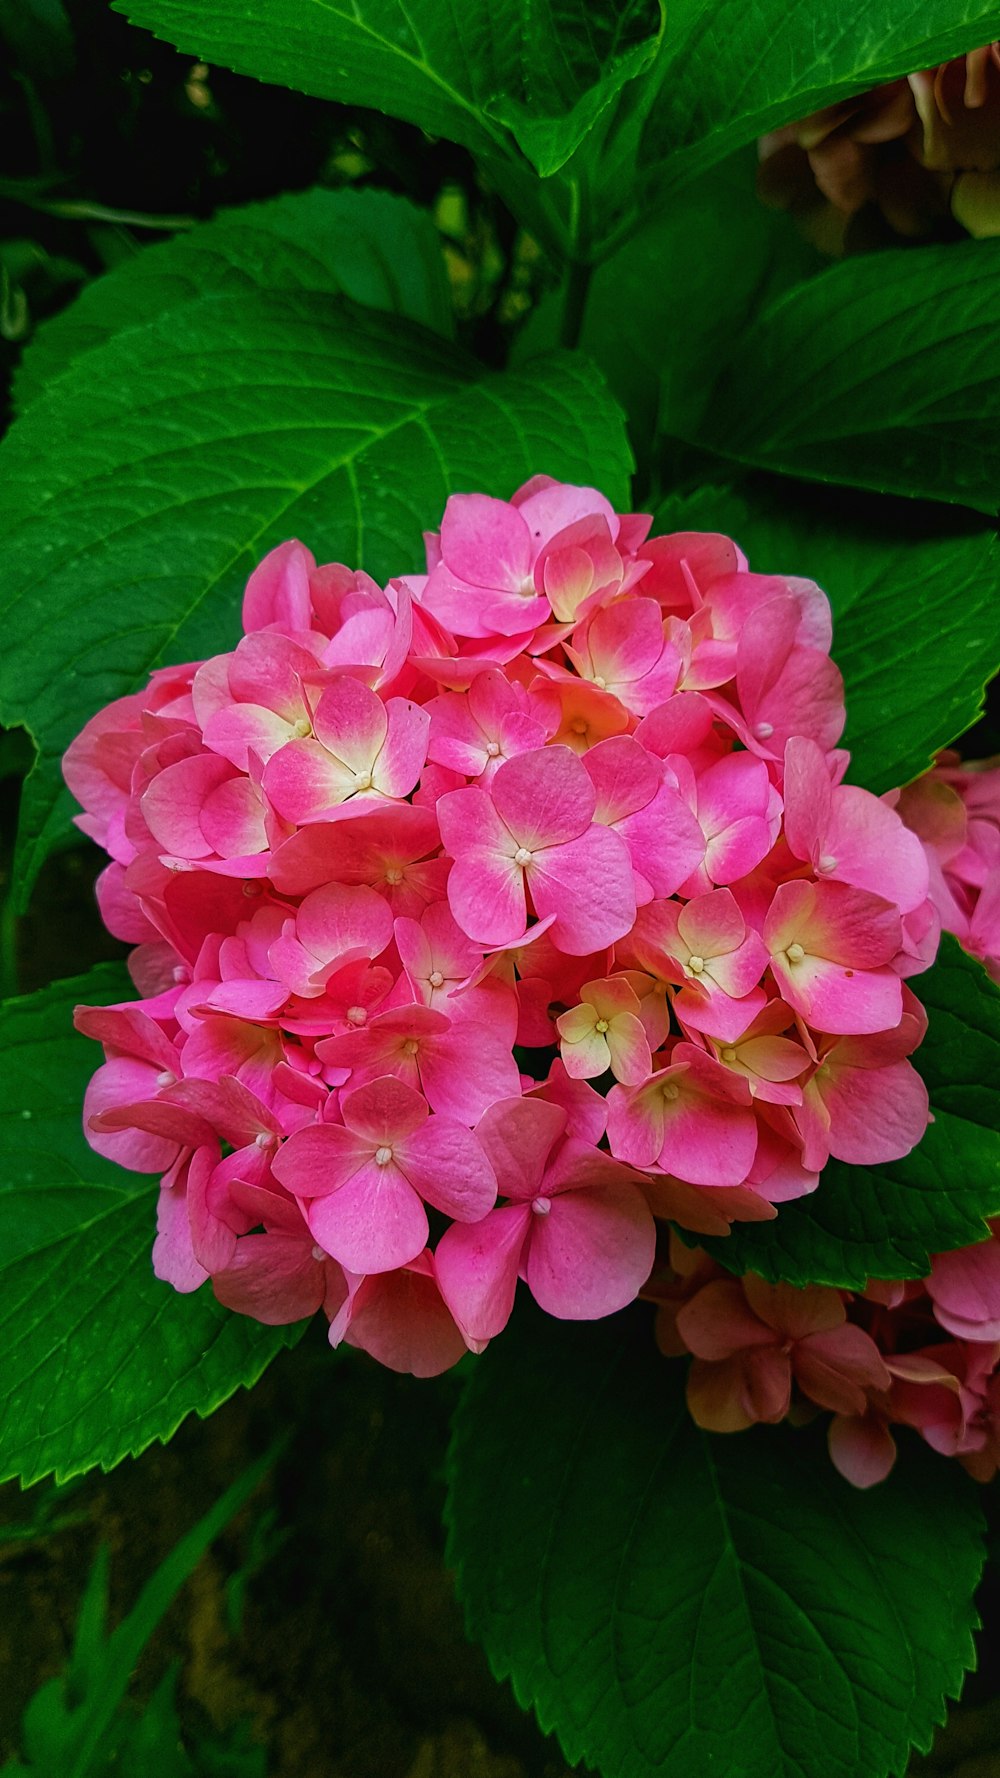 Fotografia em close-up de flores de pétalas cor-de-rosa